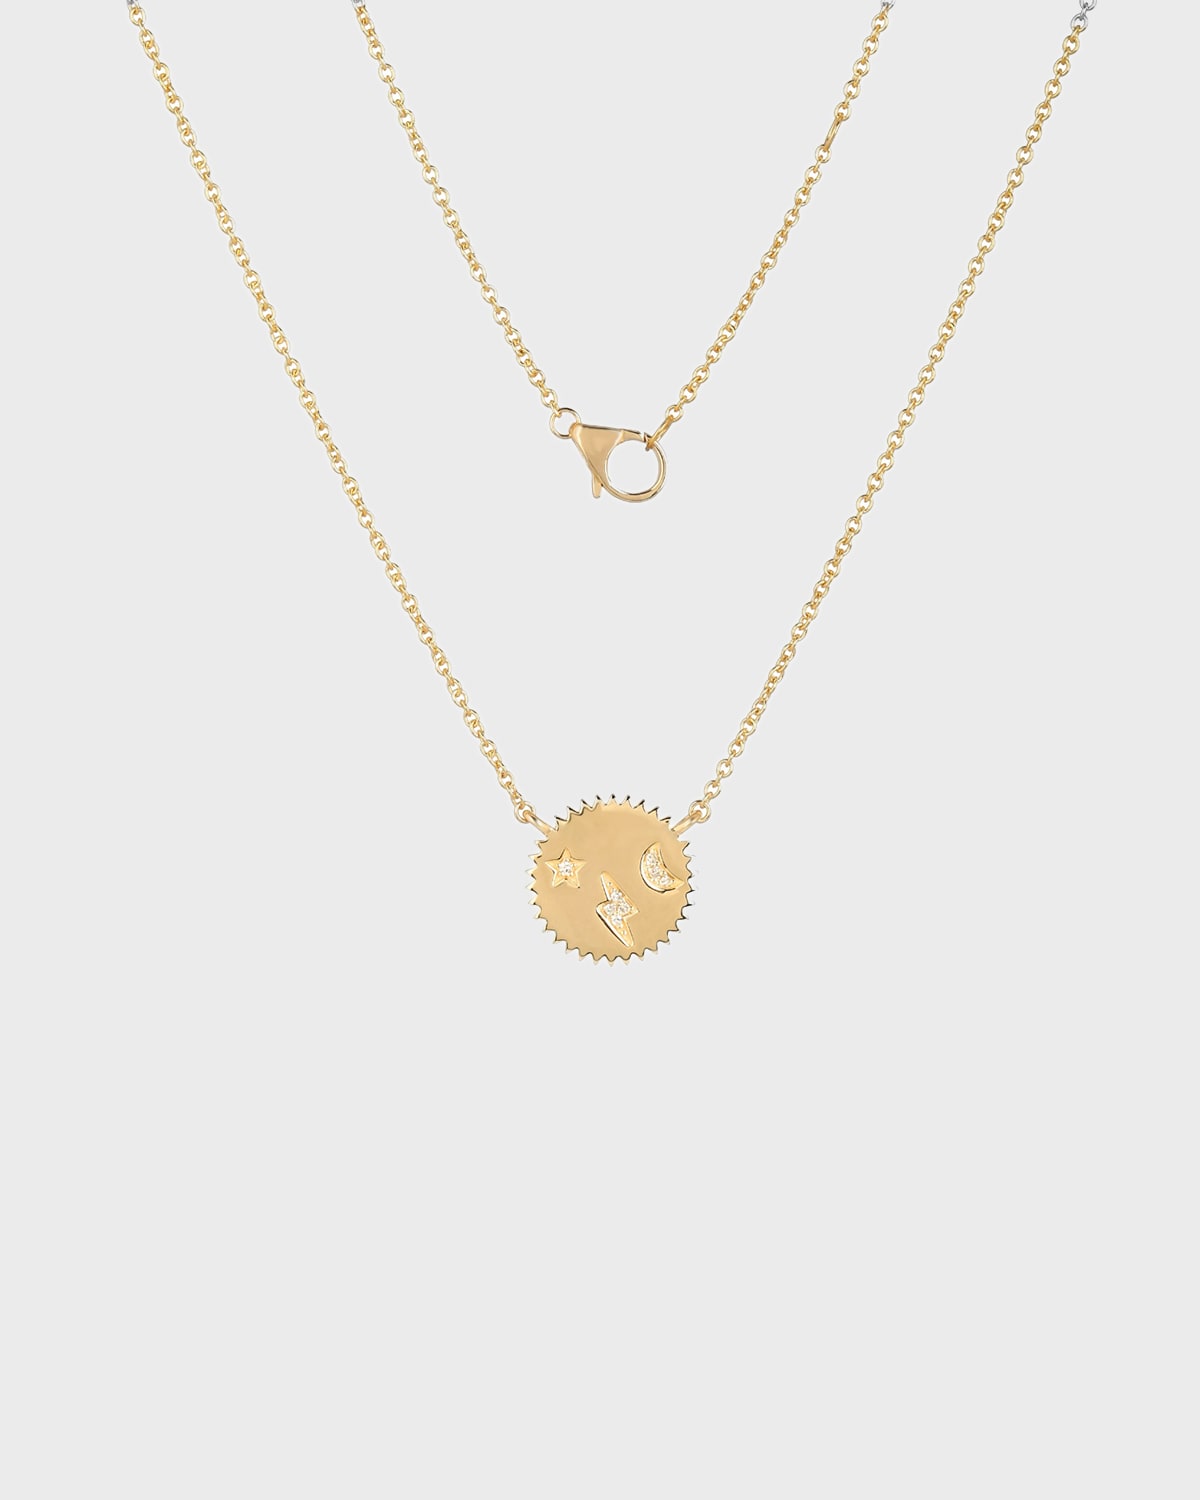 Kastel Jewelry Celestial Disc Small Necklace